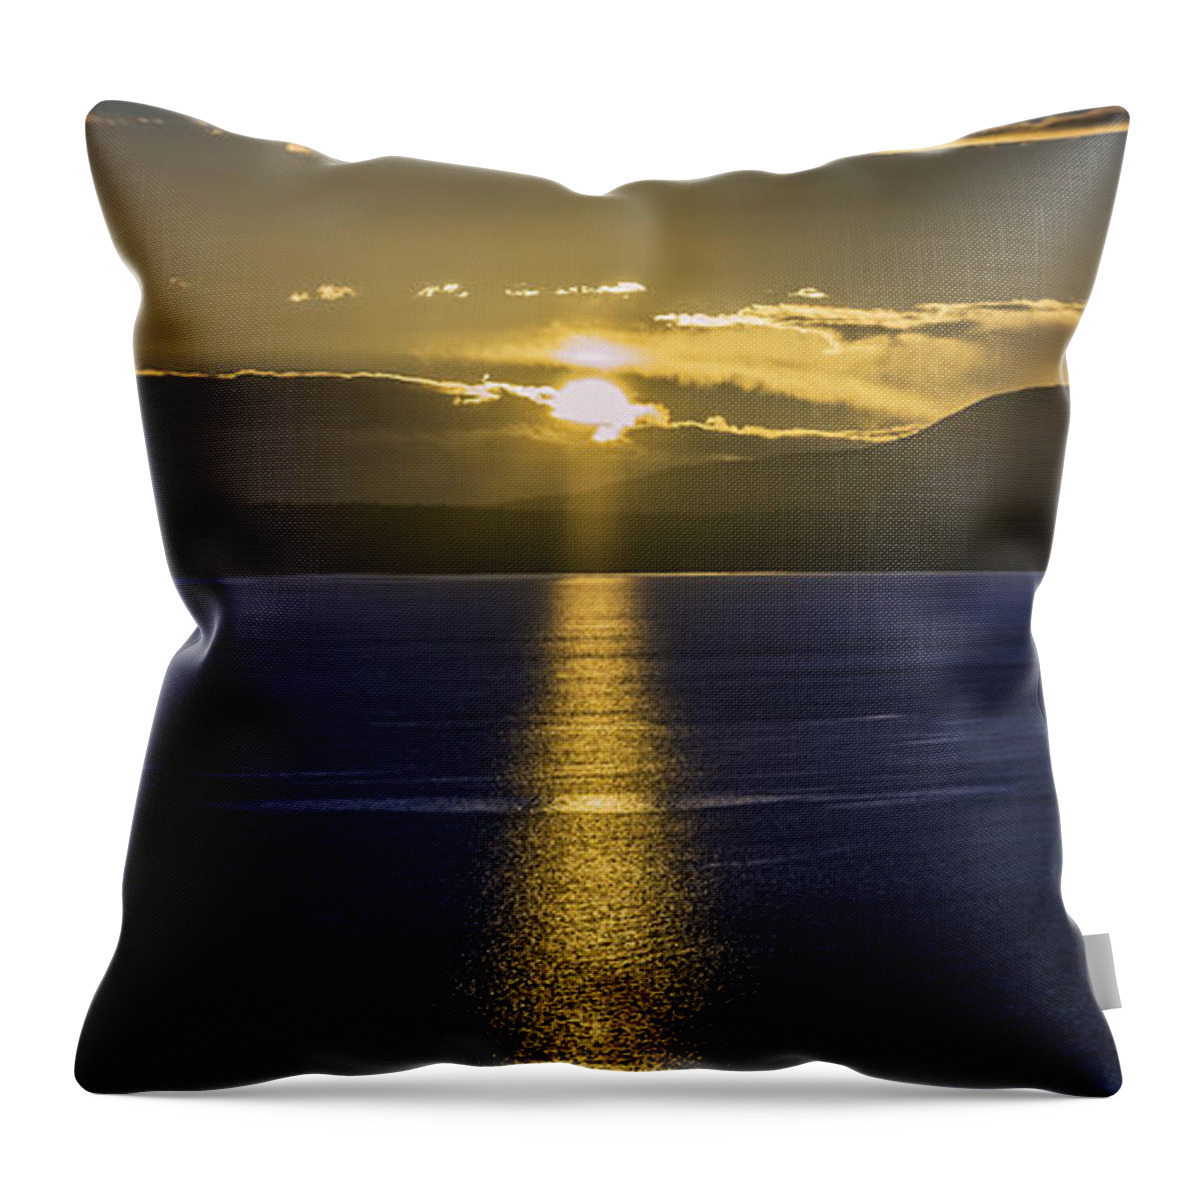 Sunset Throw Pillow featuring the photograph Suns Golden Rays by Mark Joseph